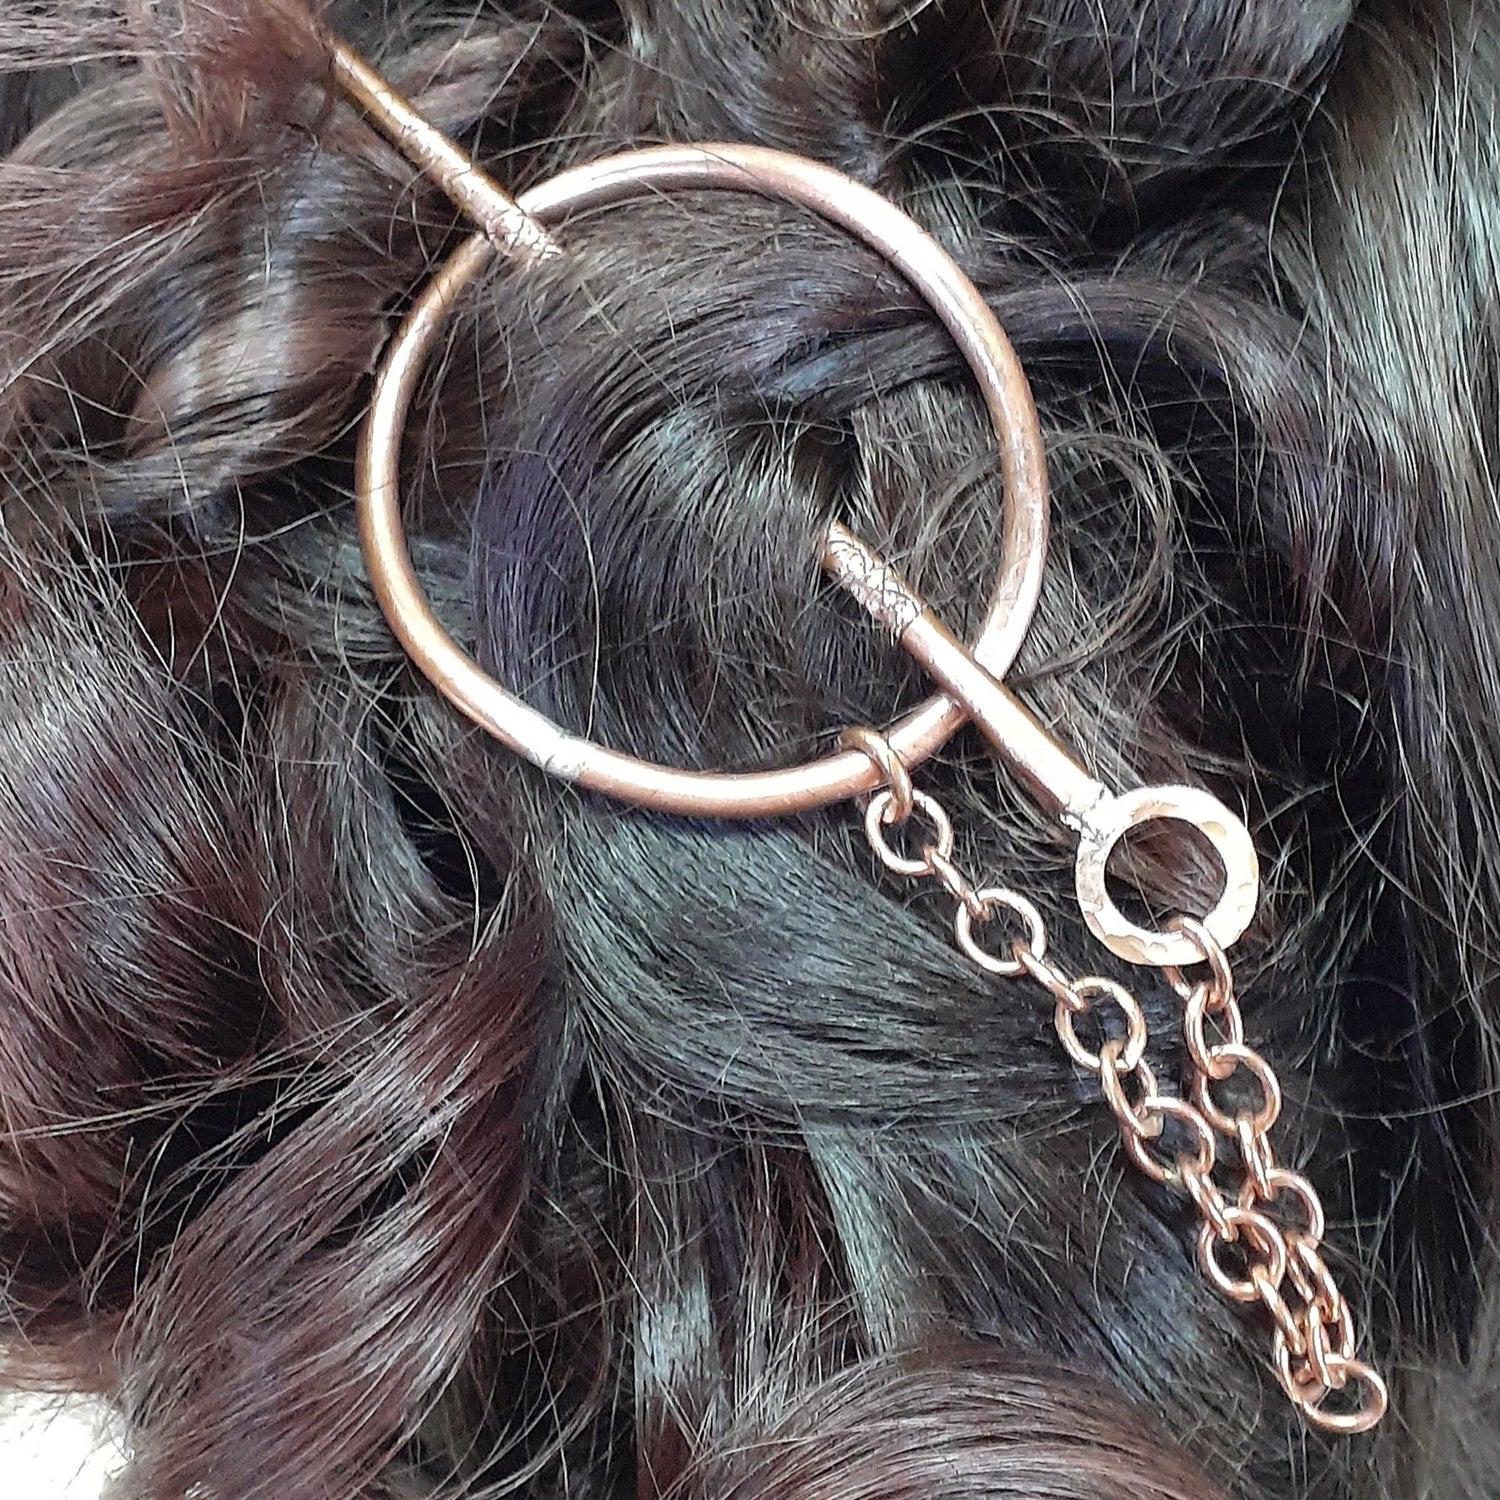 Copper Hair Jewelry, Hair Accessory, Hair Pin| WRD - WarmRainyDay